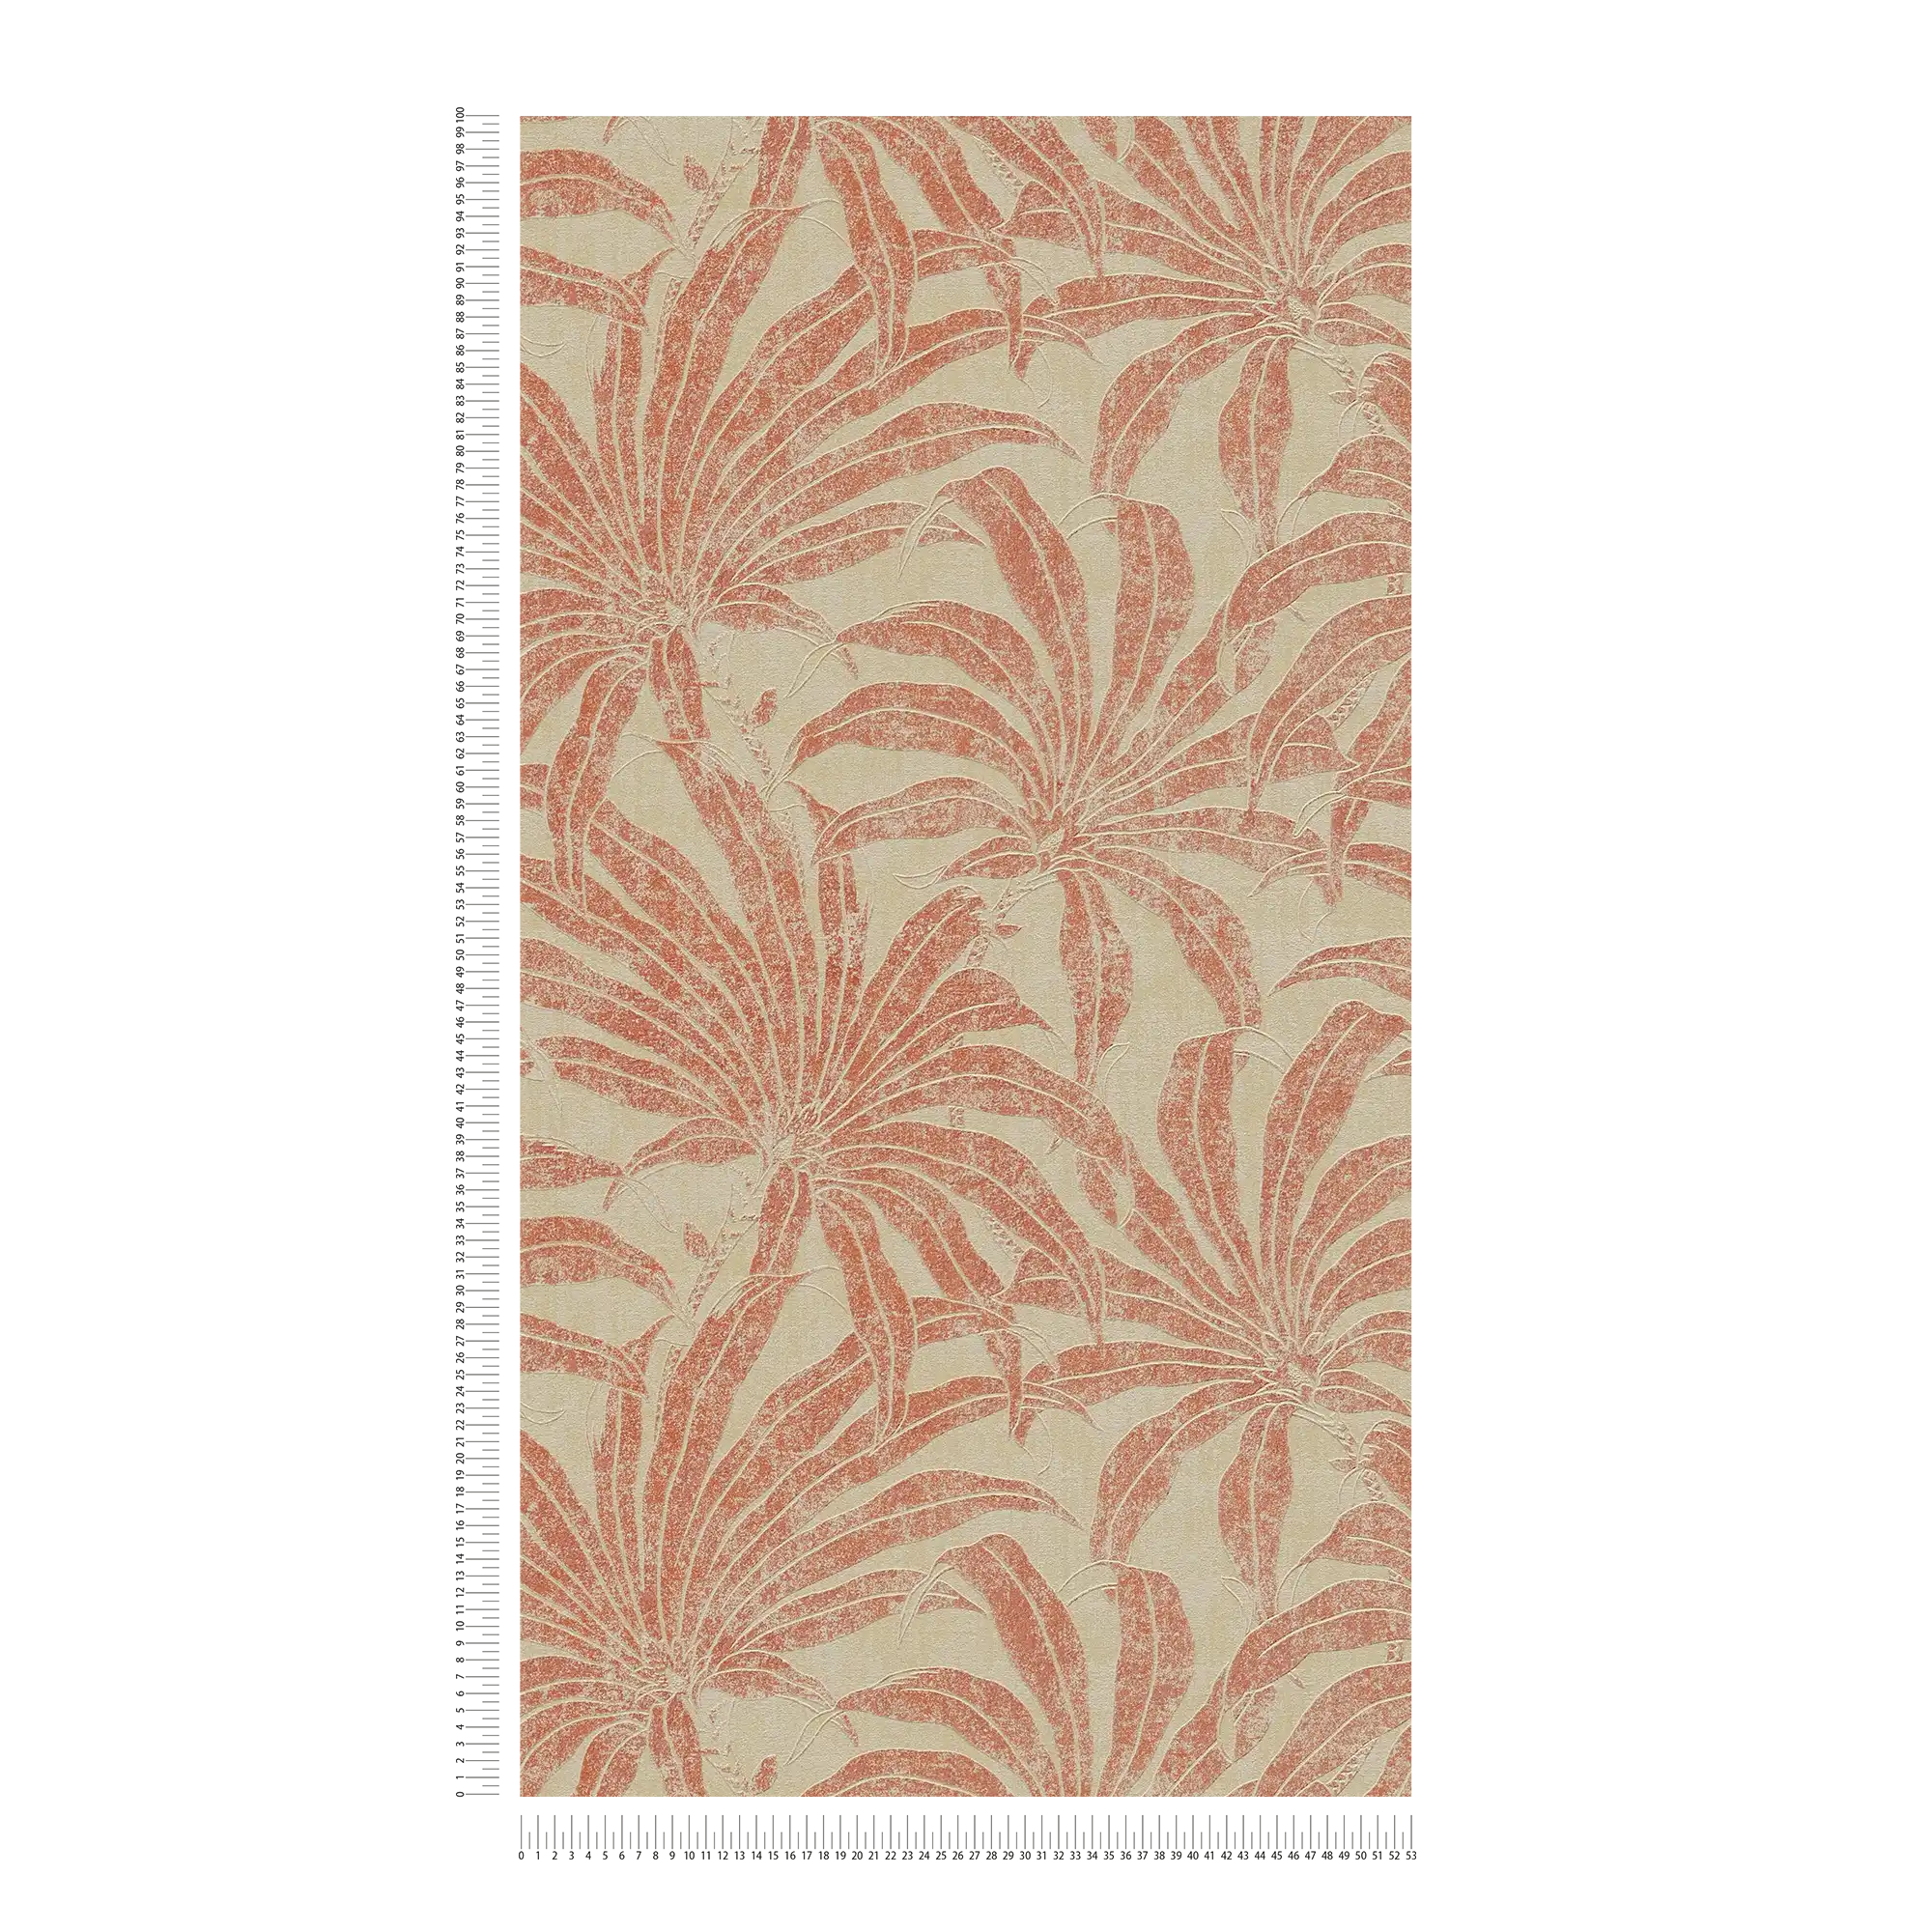             Floral pattern wallpaper with jungle blossom - beige, red, orange
        